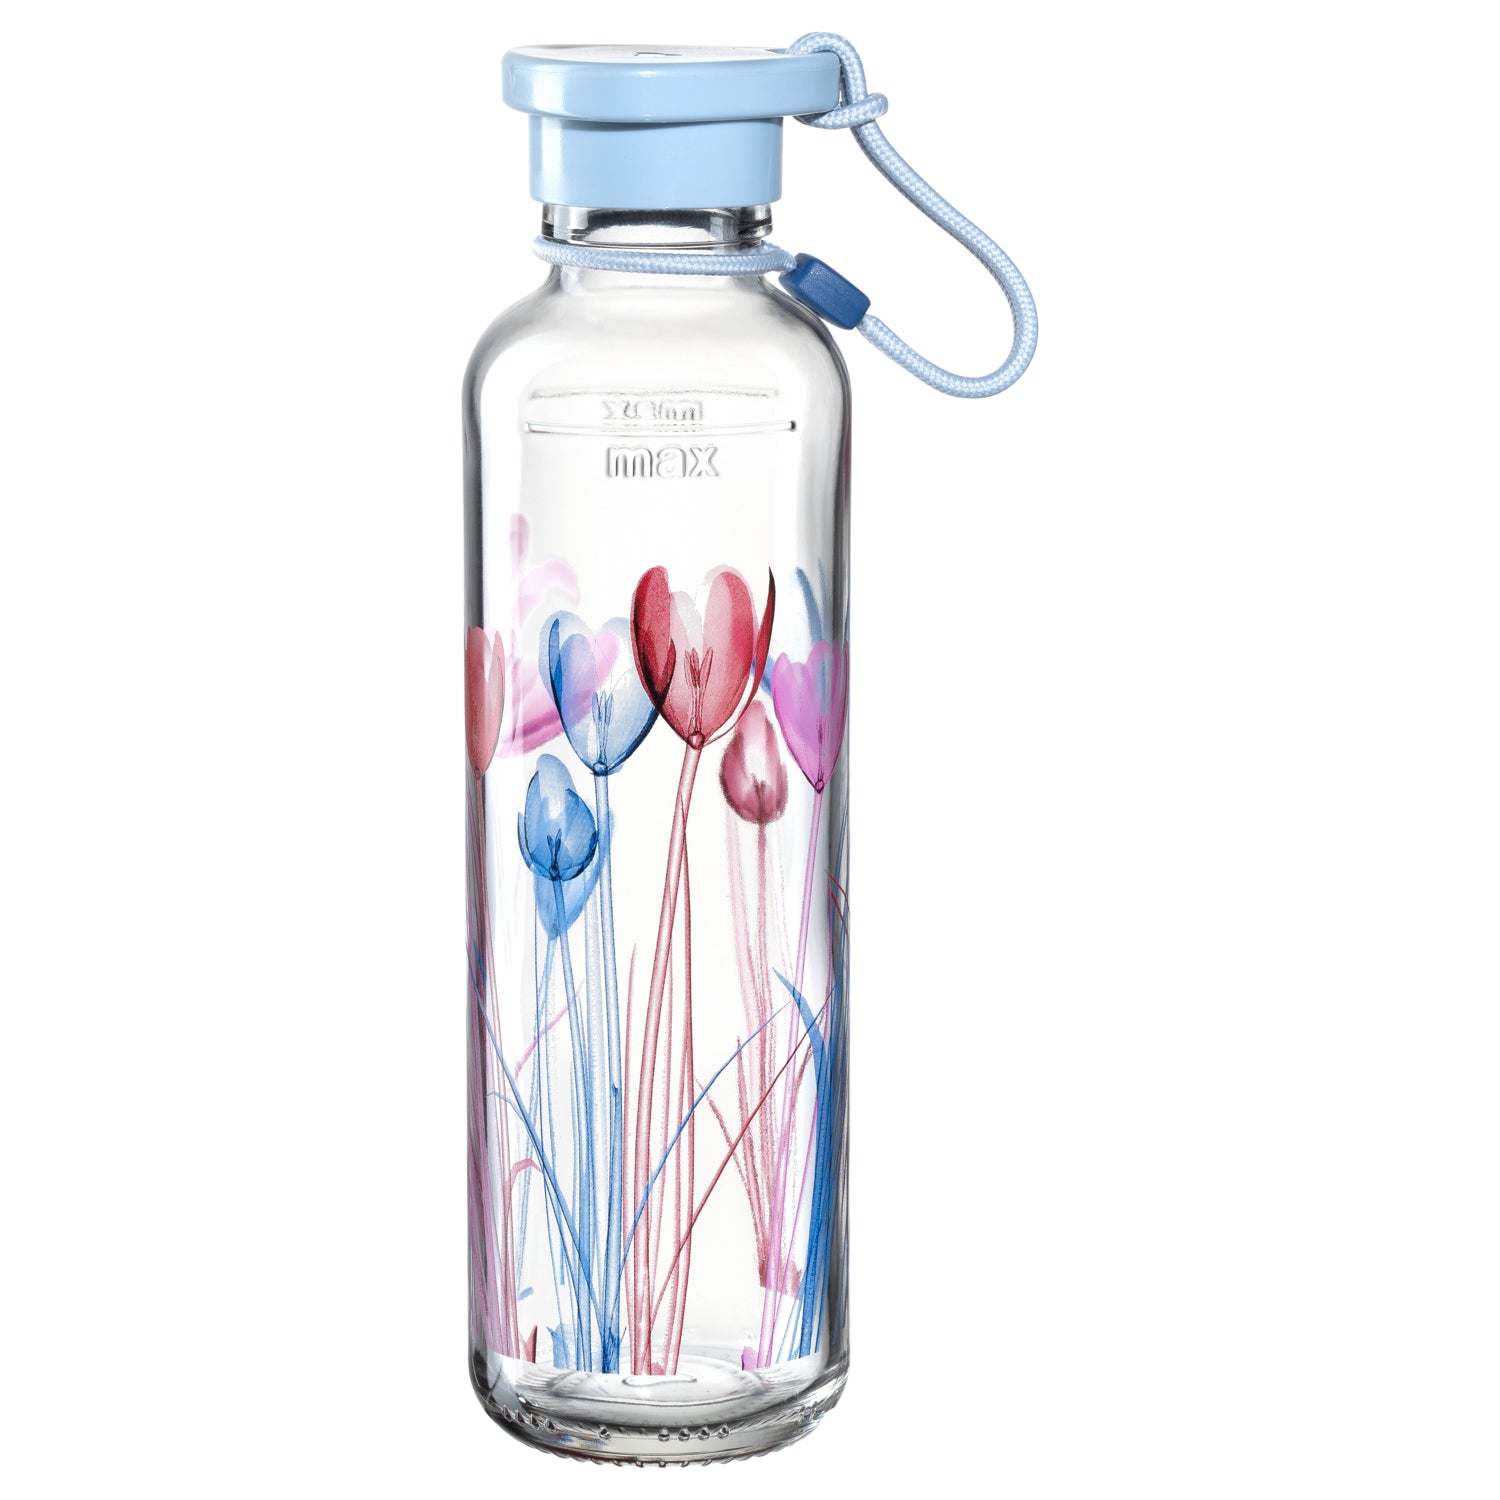 Flasche IN GIRO 500 ml Flower hellblau